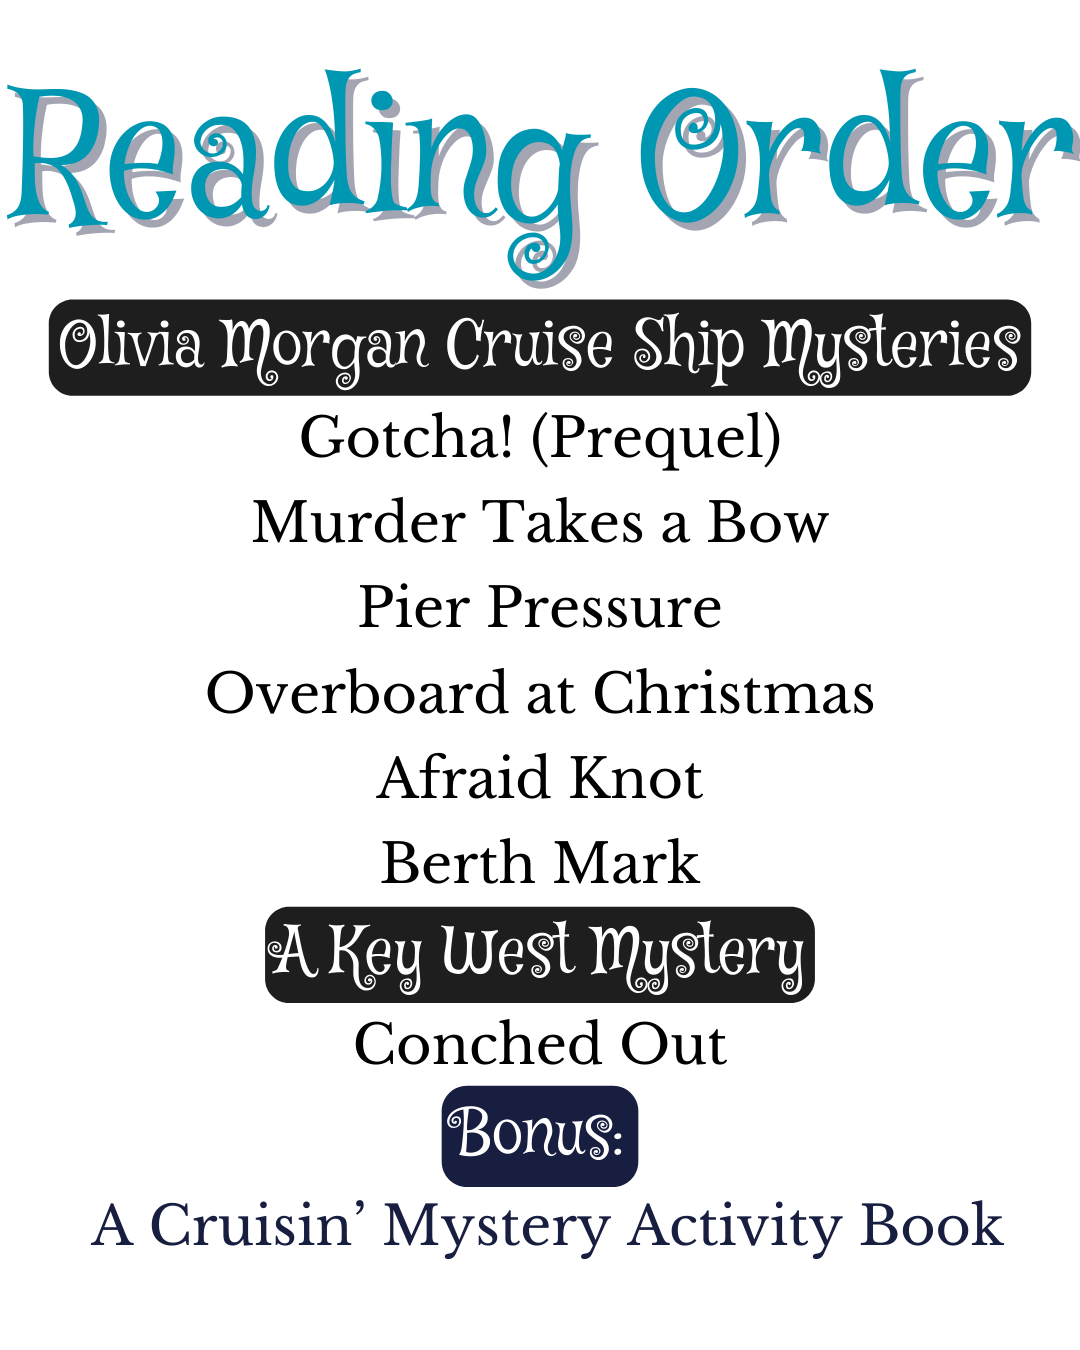 Ultimate Cruise Ship Mystery eBook Bundle